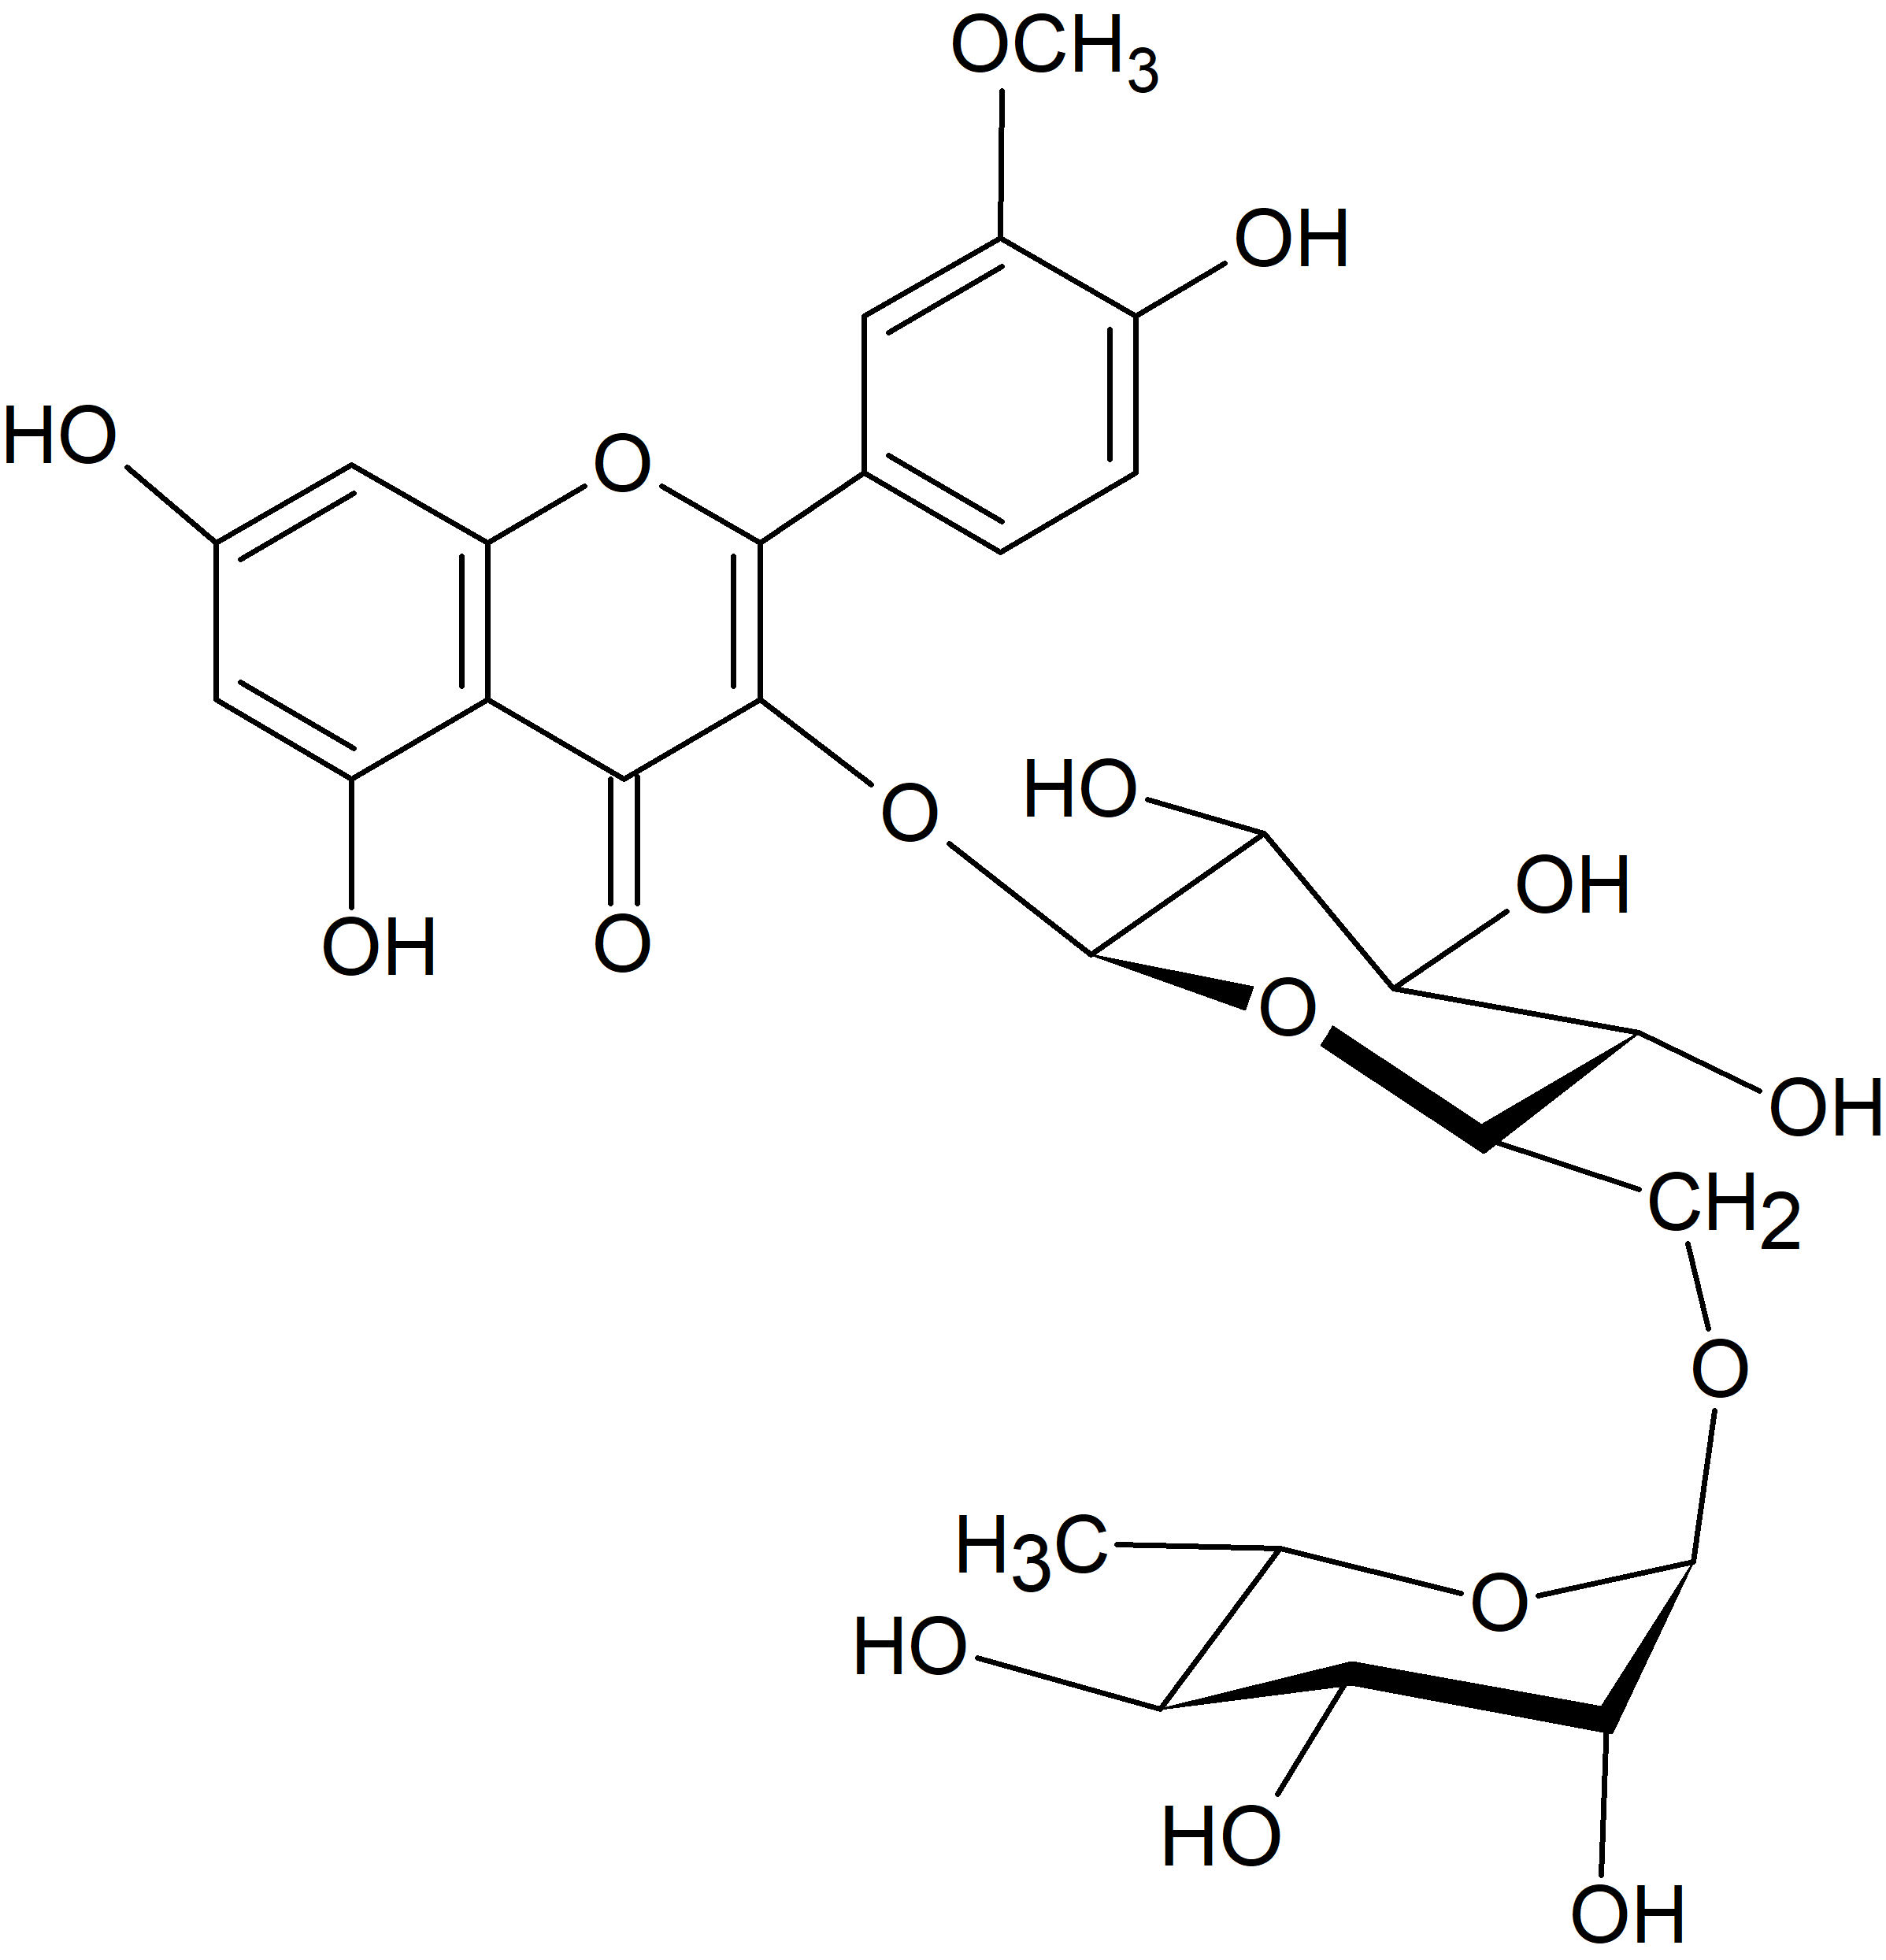 Isorhamnetin 3-O-rutinoside